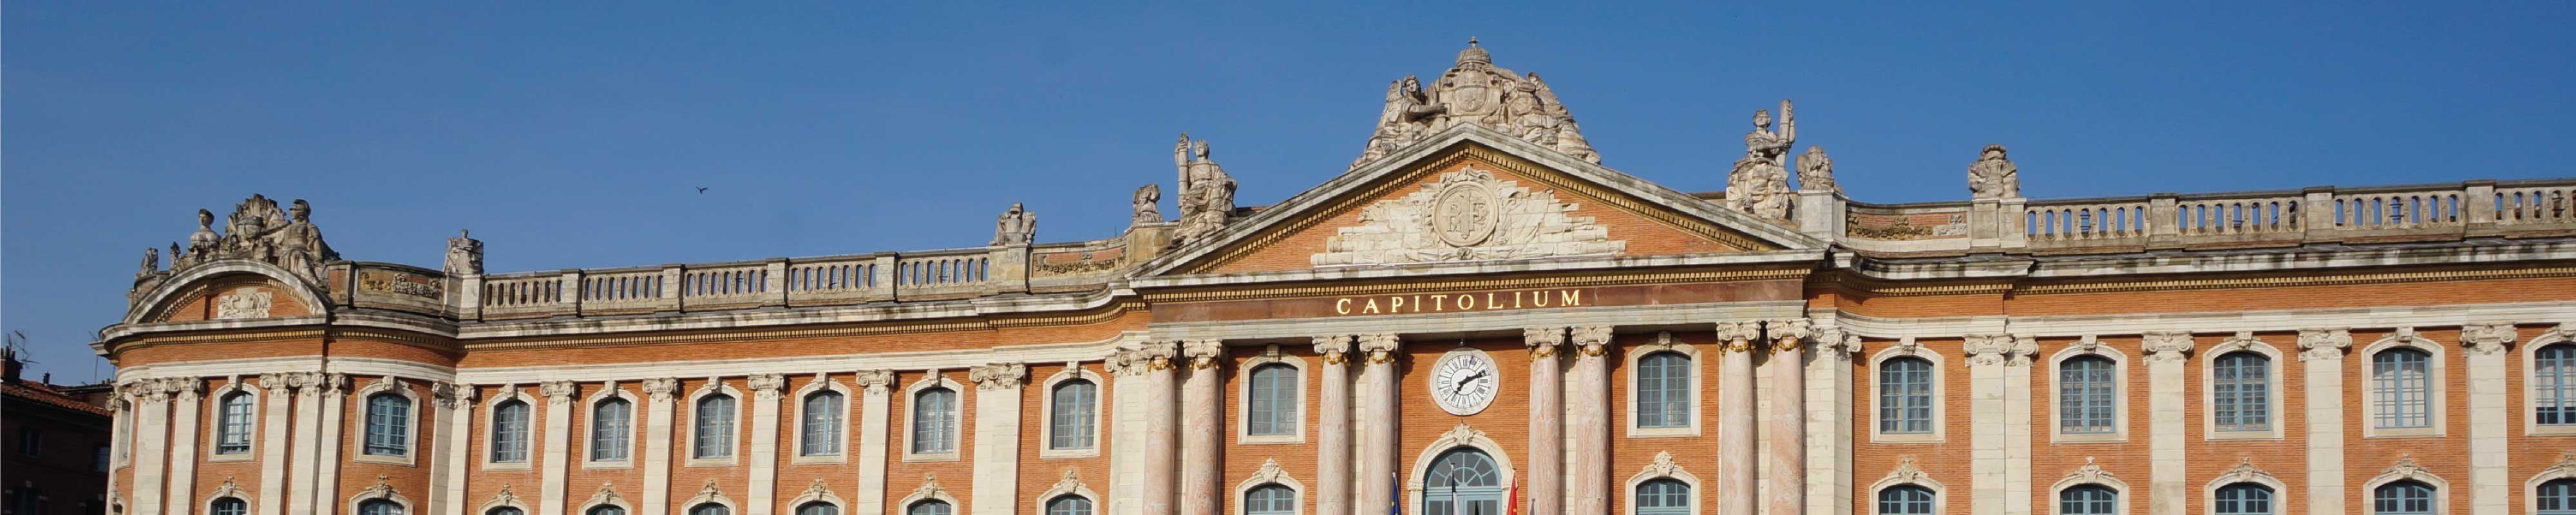 Gepäckaufbewahrung | Capitole in Toulouse - Nannybag